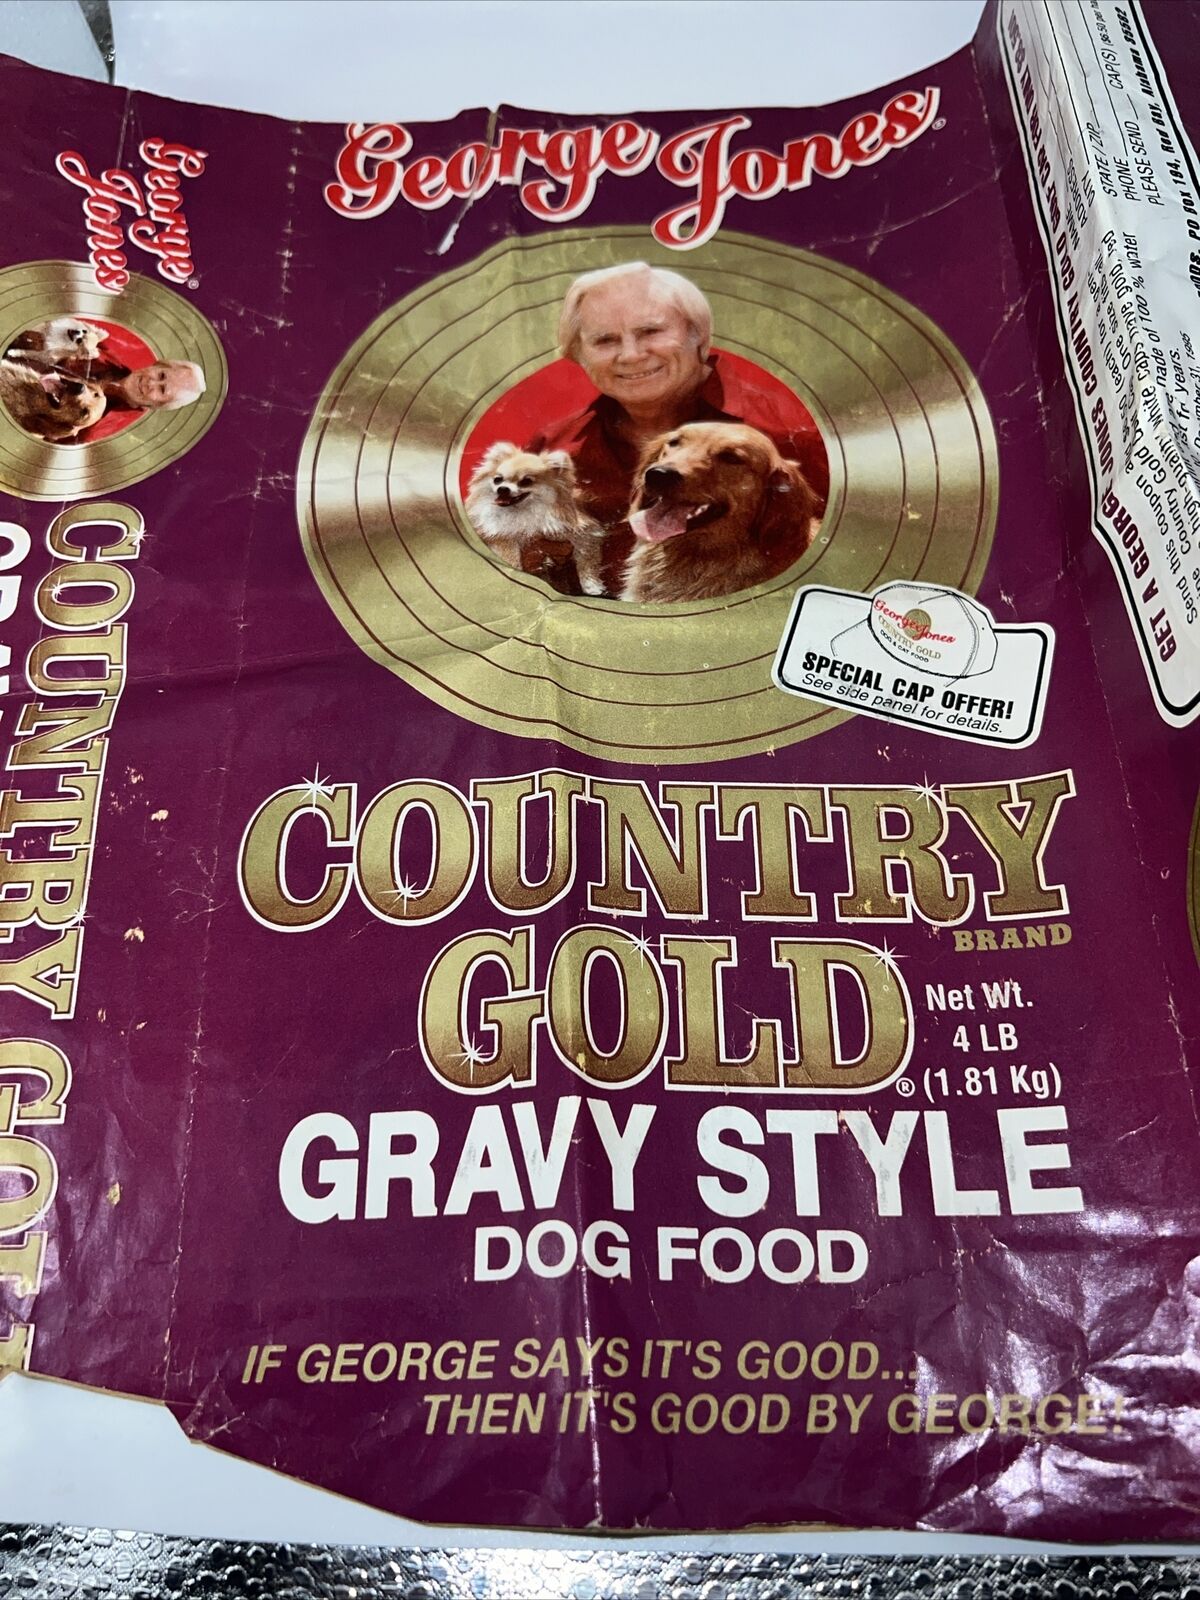 Vintage George Jones country, gold dog food, advertisement bag